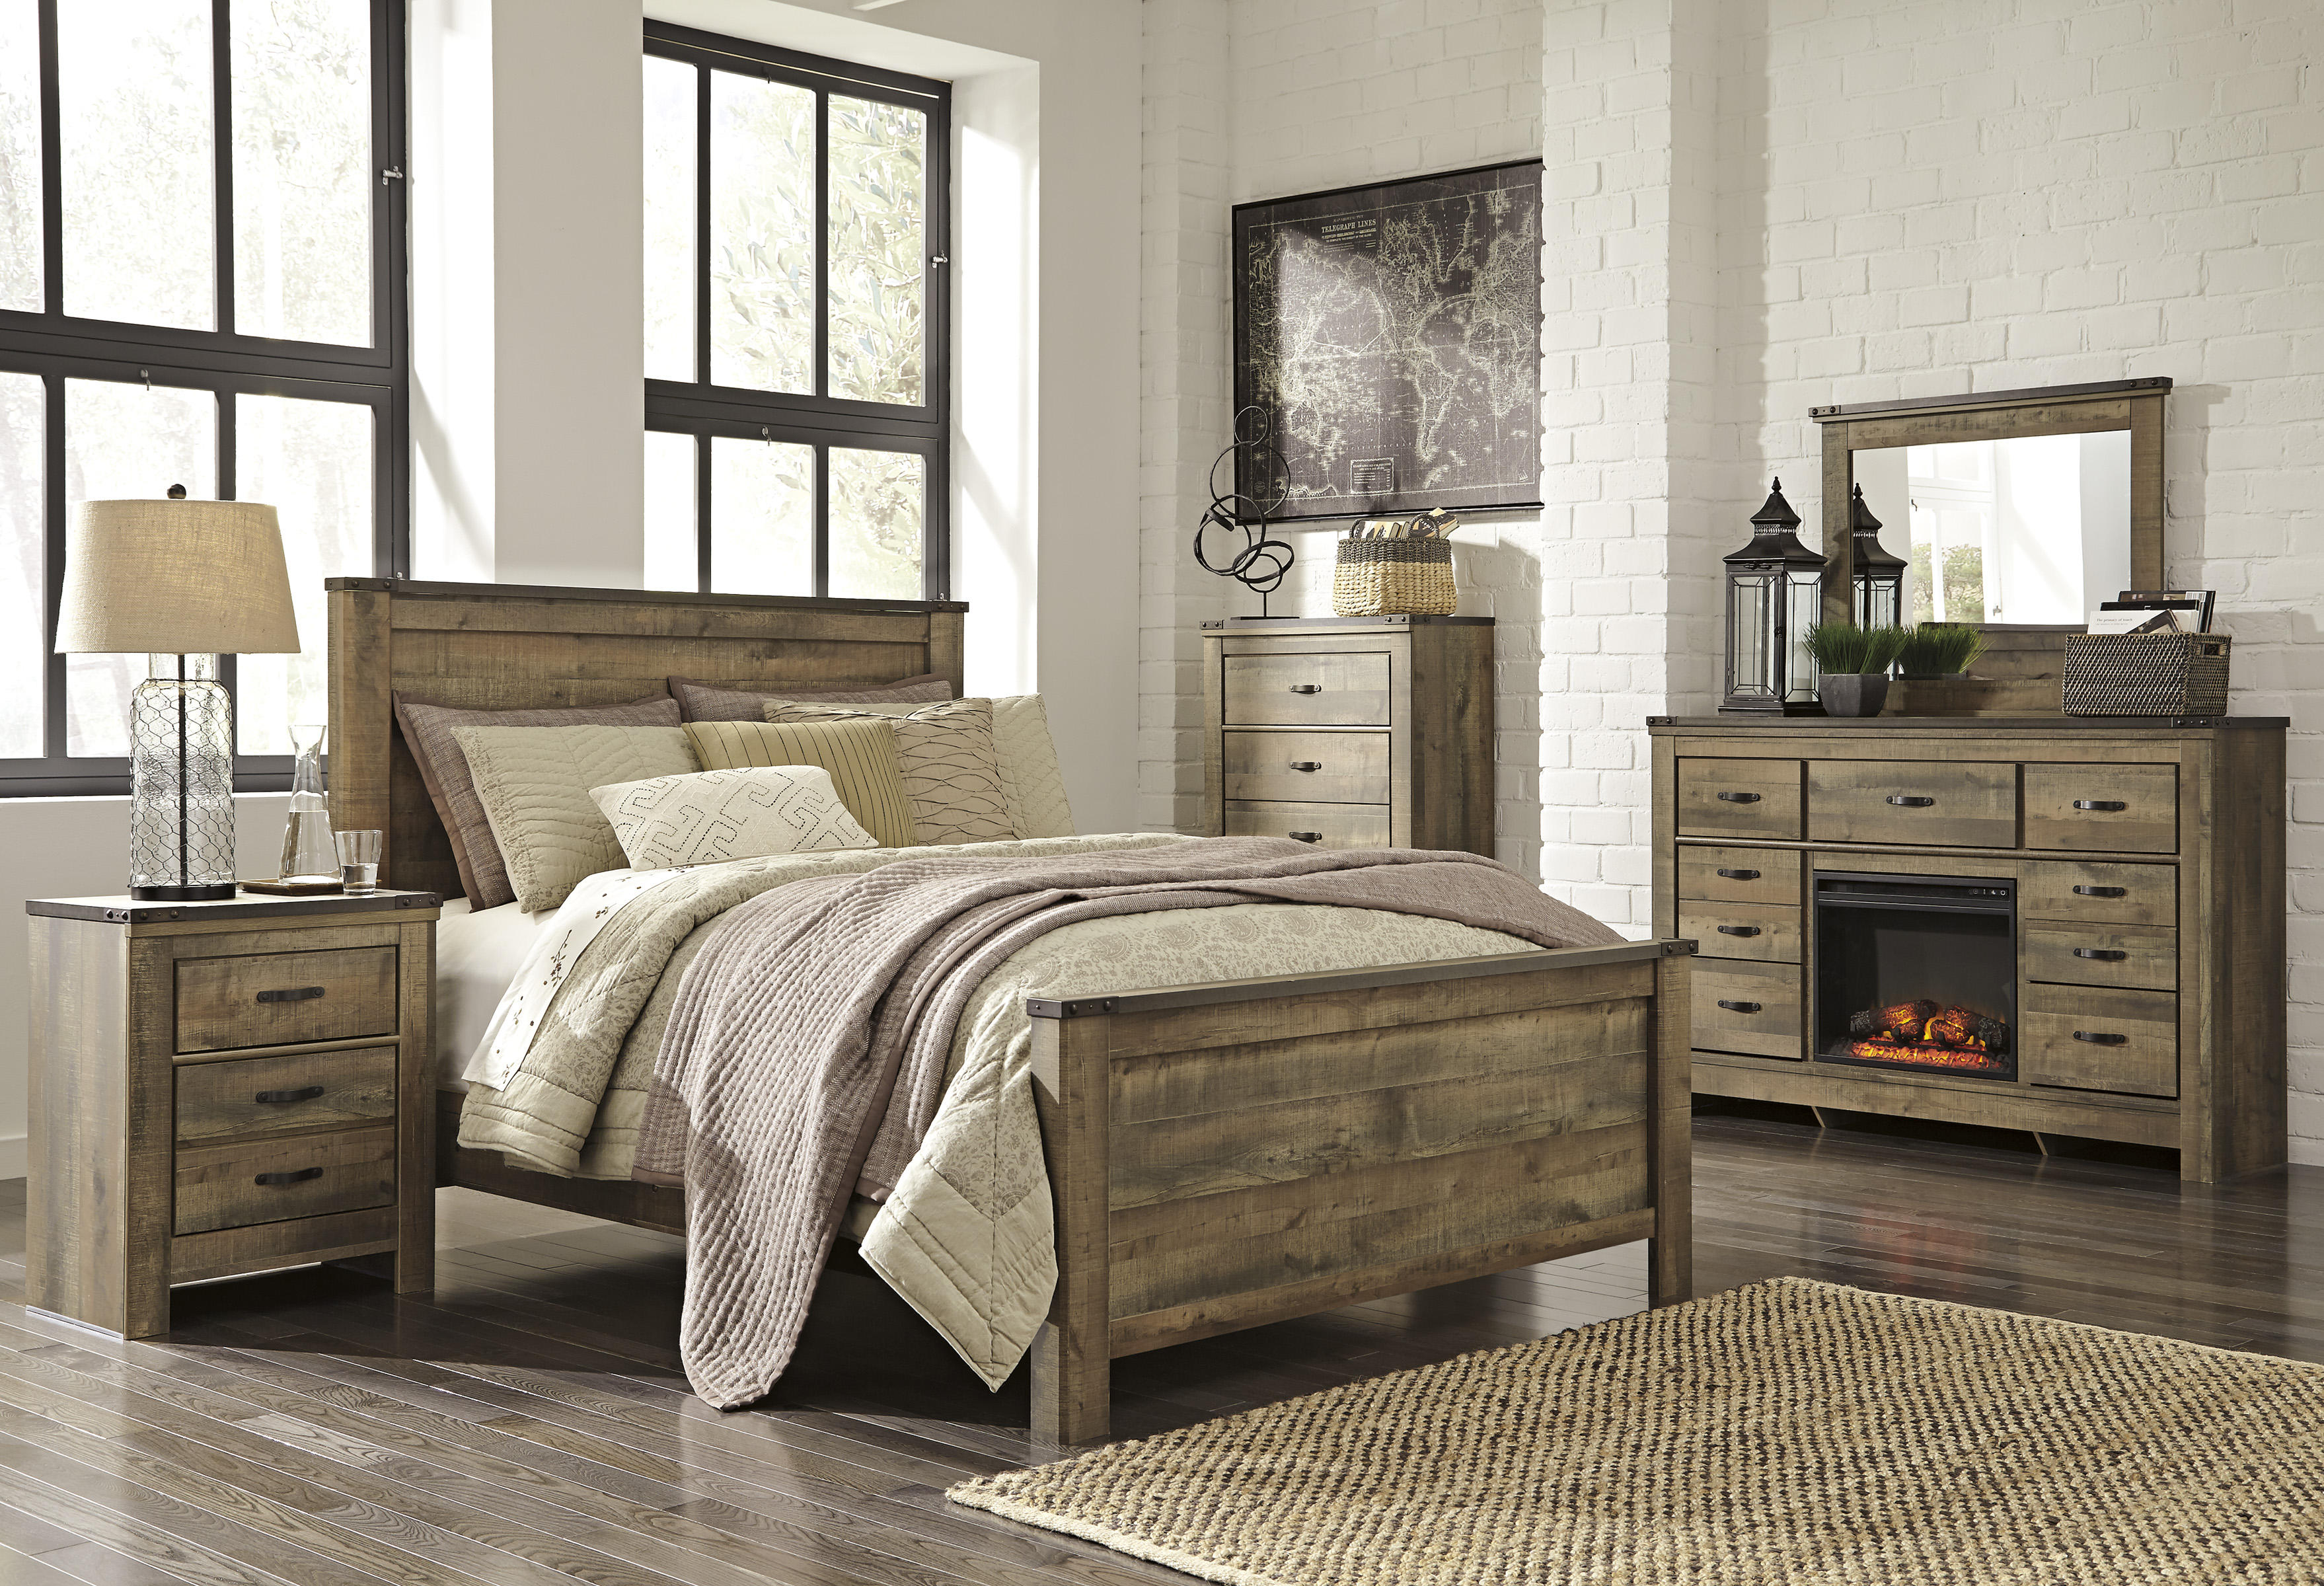 willowick bedroom furniture furniture